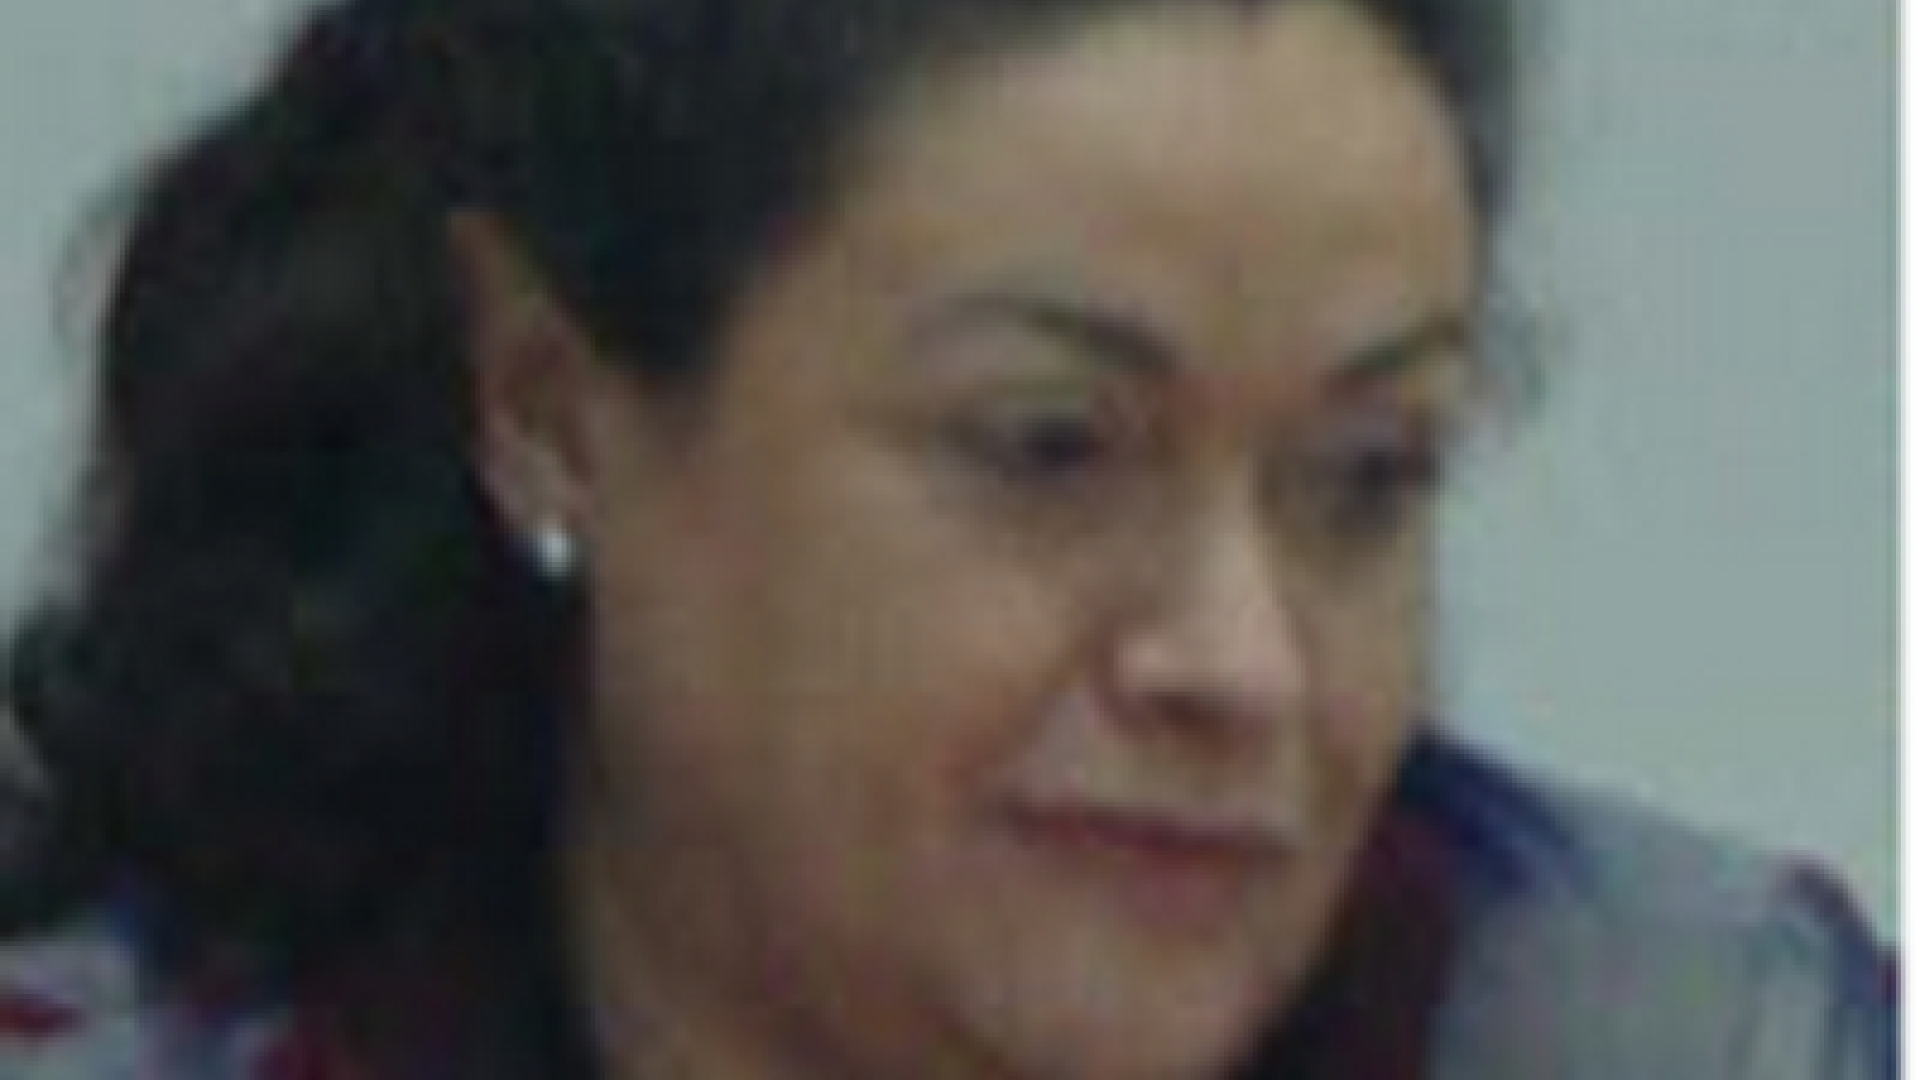 Claudia Moarcas, Ministerul Muncii